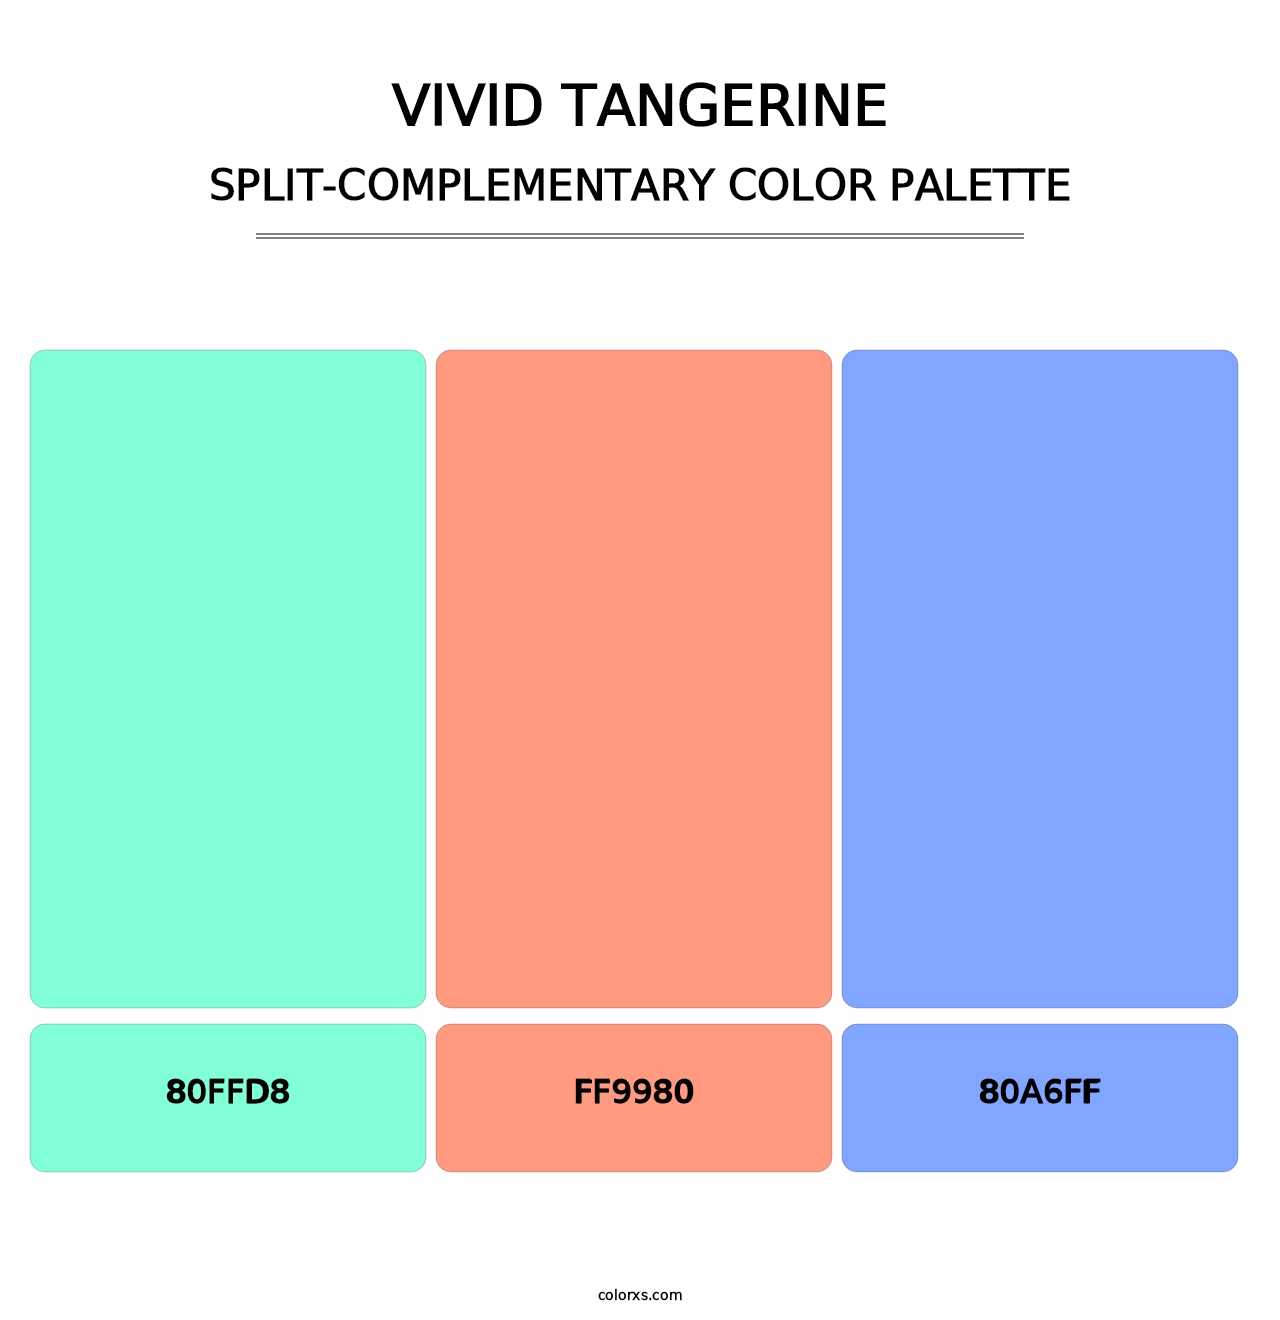 Vivid Tangerine - Split-Complementary Color Palette